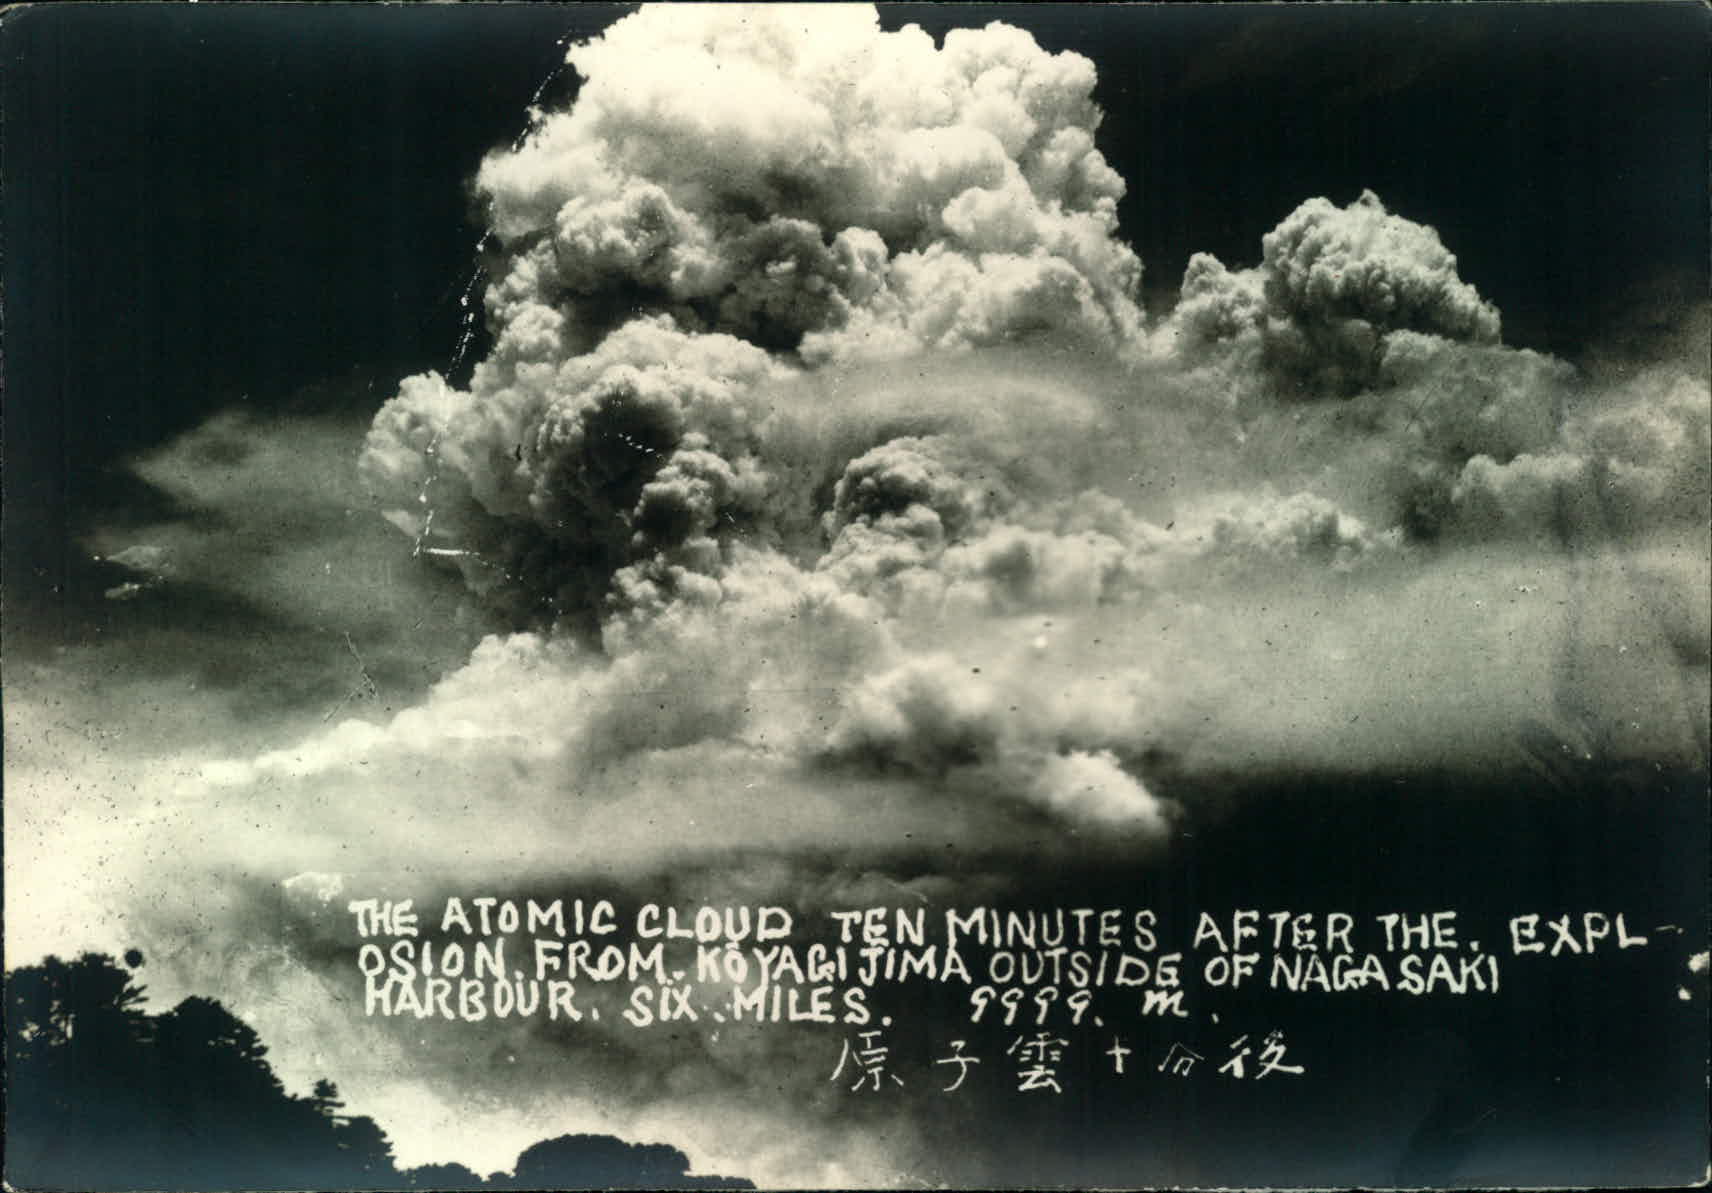 Fat Man over Nagasaki on 9 August, 1945 - Nuclear Destruction